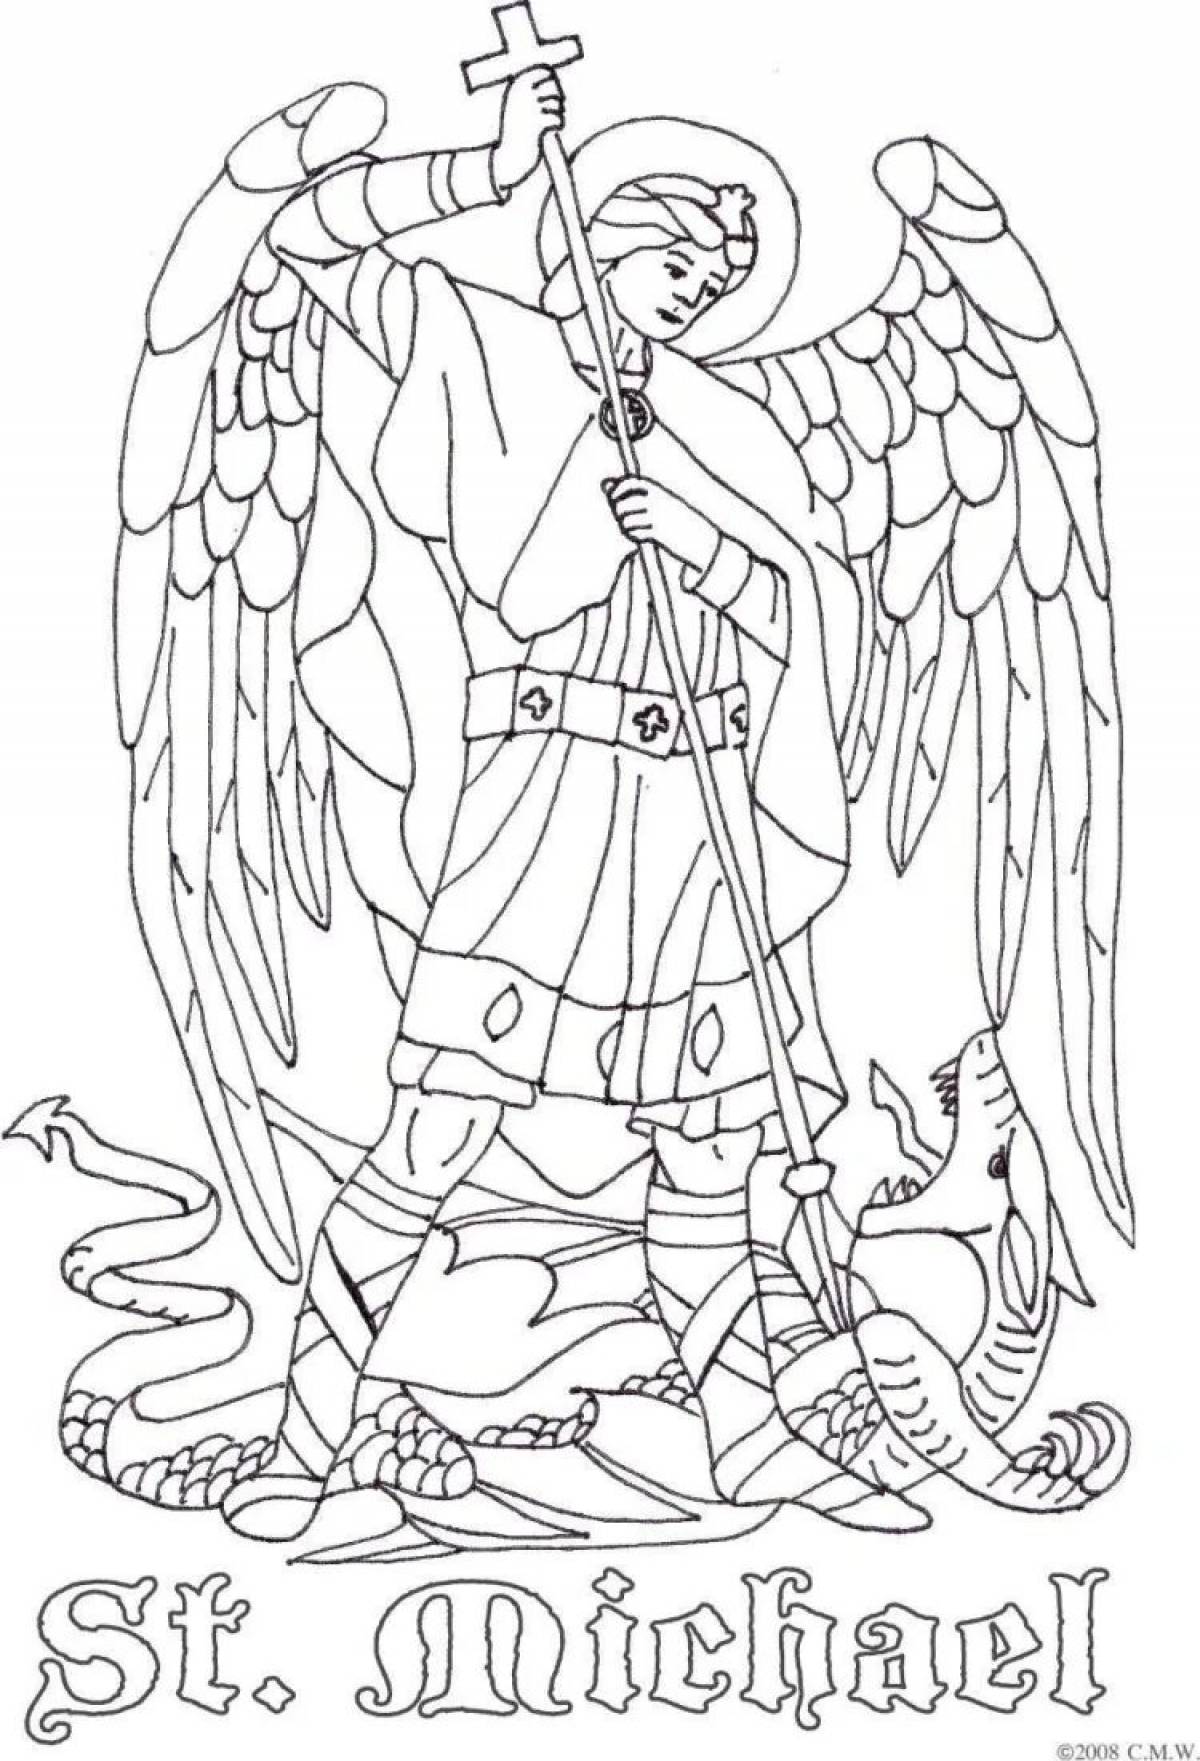 Archangel michael #3